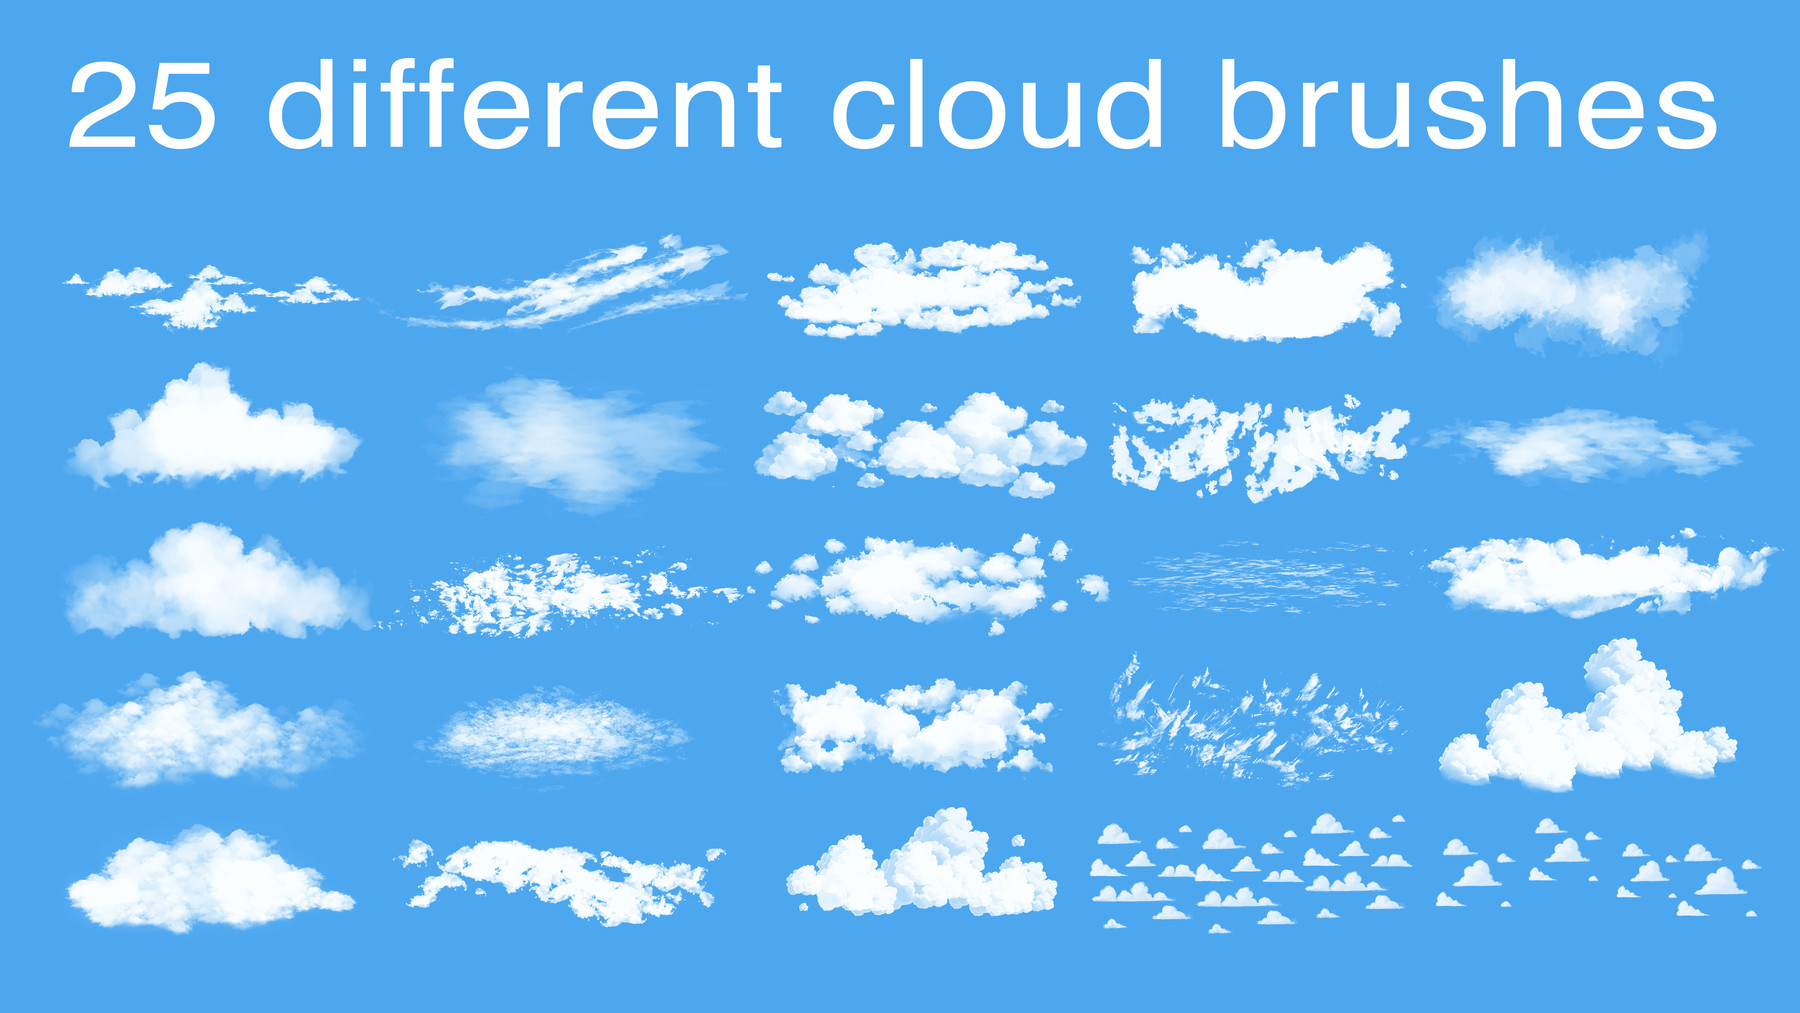 cloud illustrator brushes free download